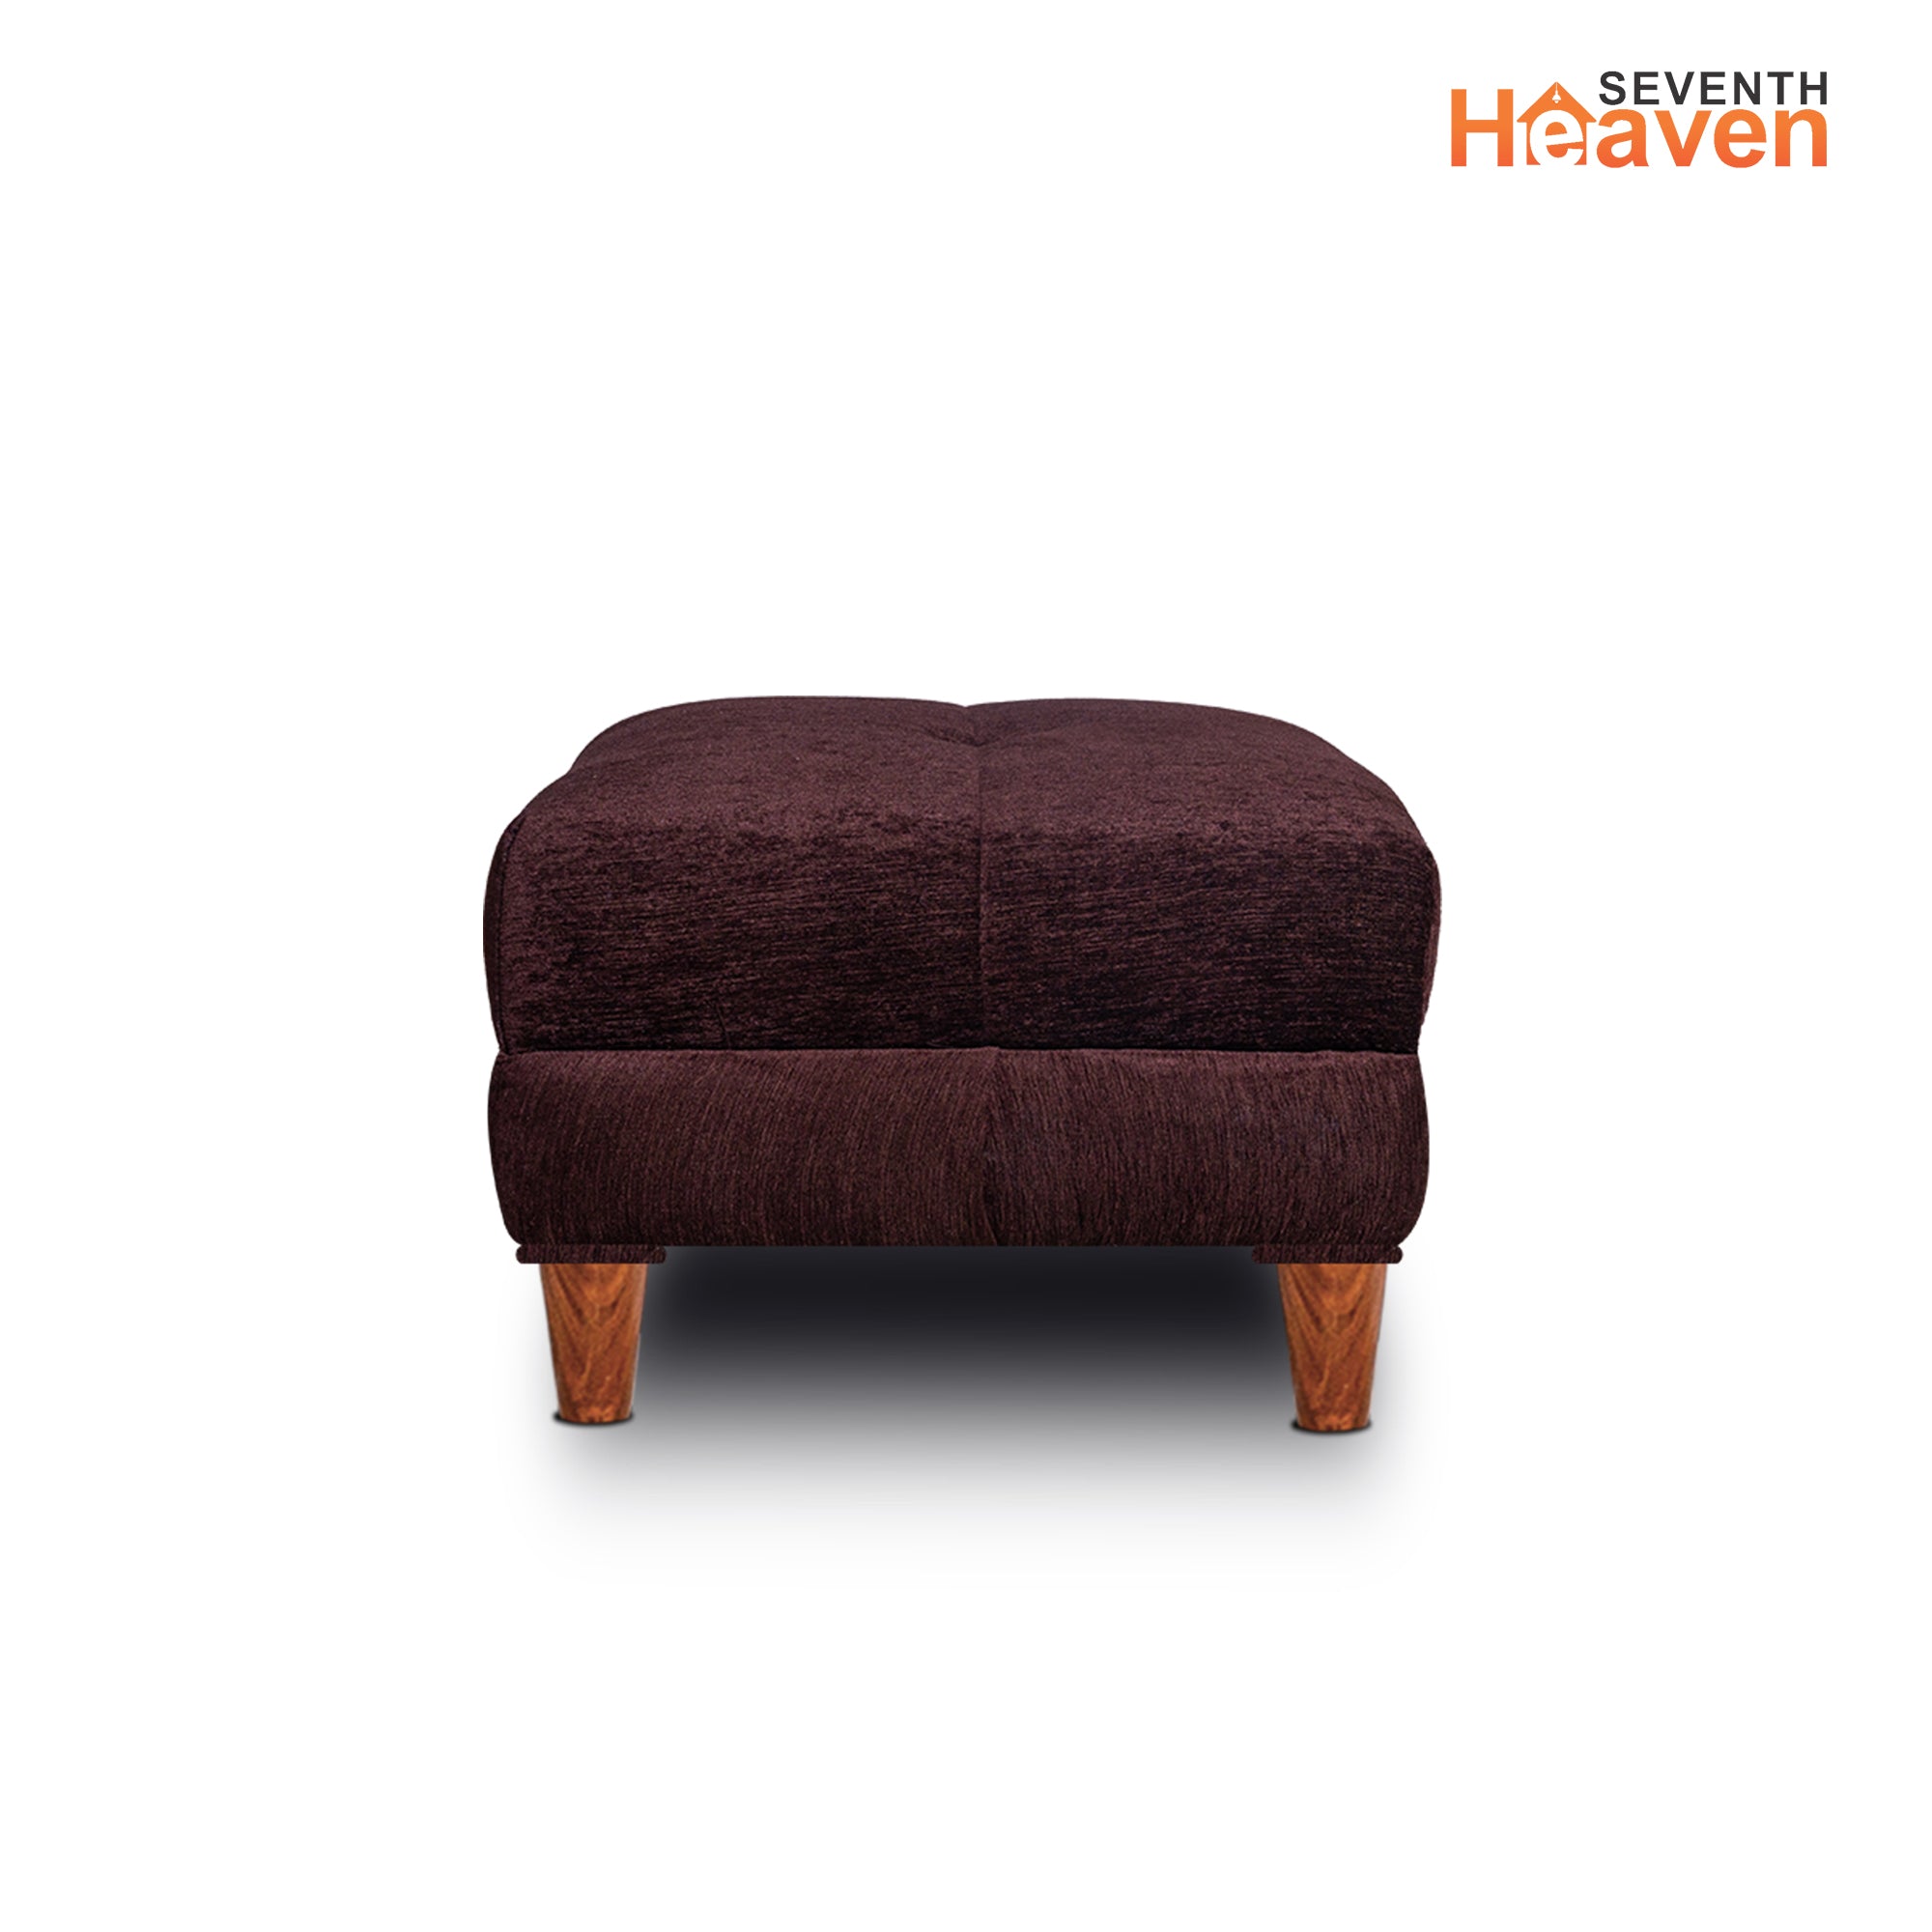 Seventh Heaven Milan 4 Seater Sofa with Ottoman, Chenille Molfino Fabric: 3 Year Warranty Fabric 4 Seater Sofa  (Finish Color - Brown, DIY(Do-It-Yourself))